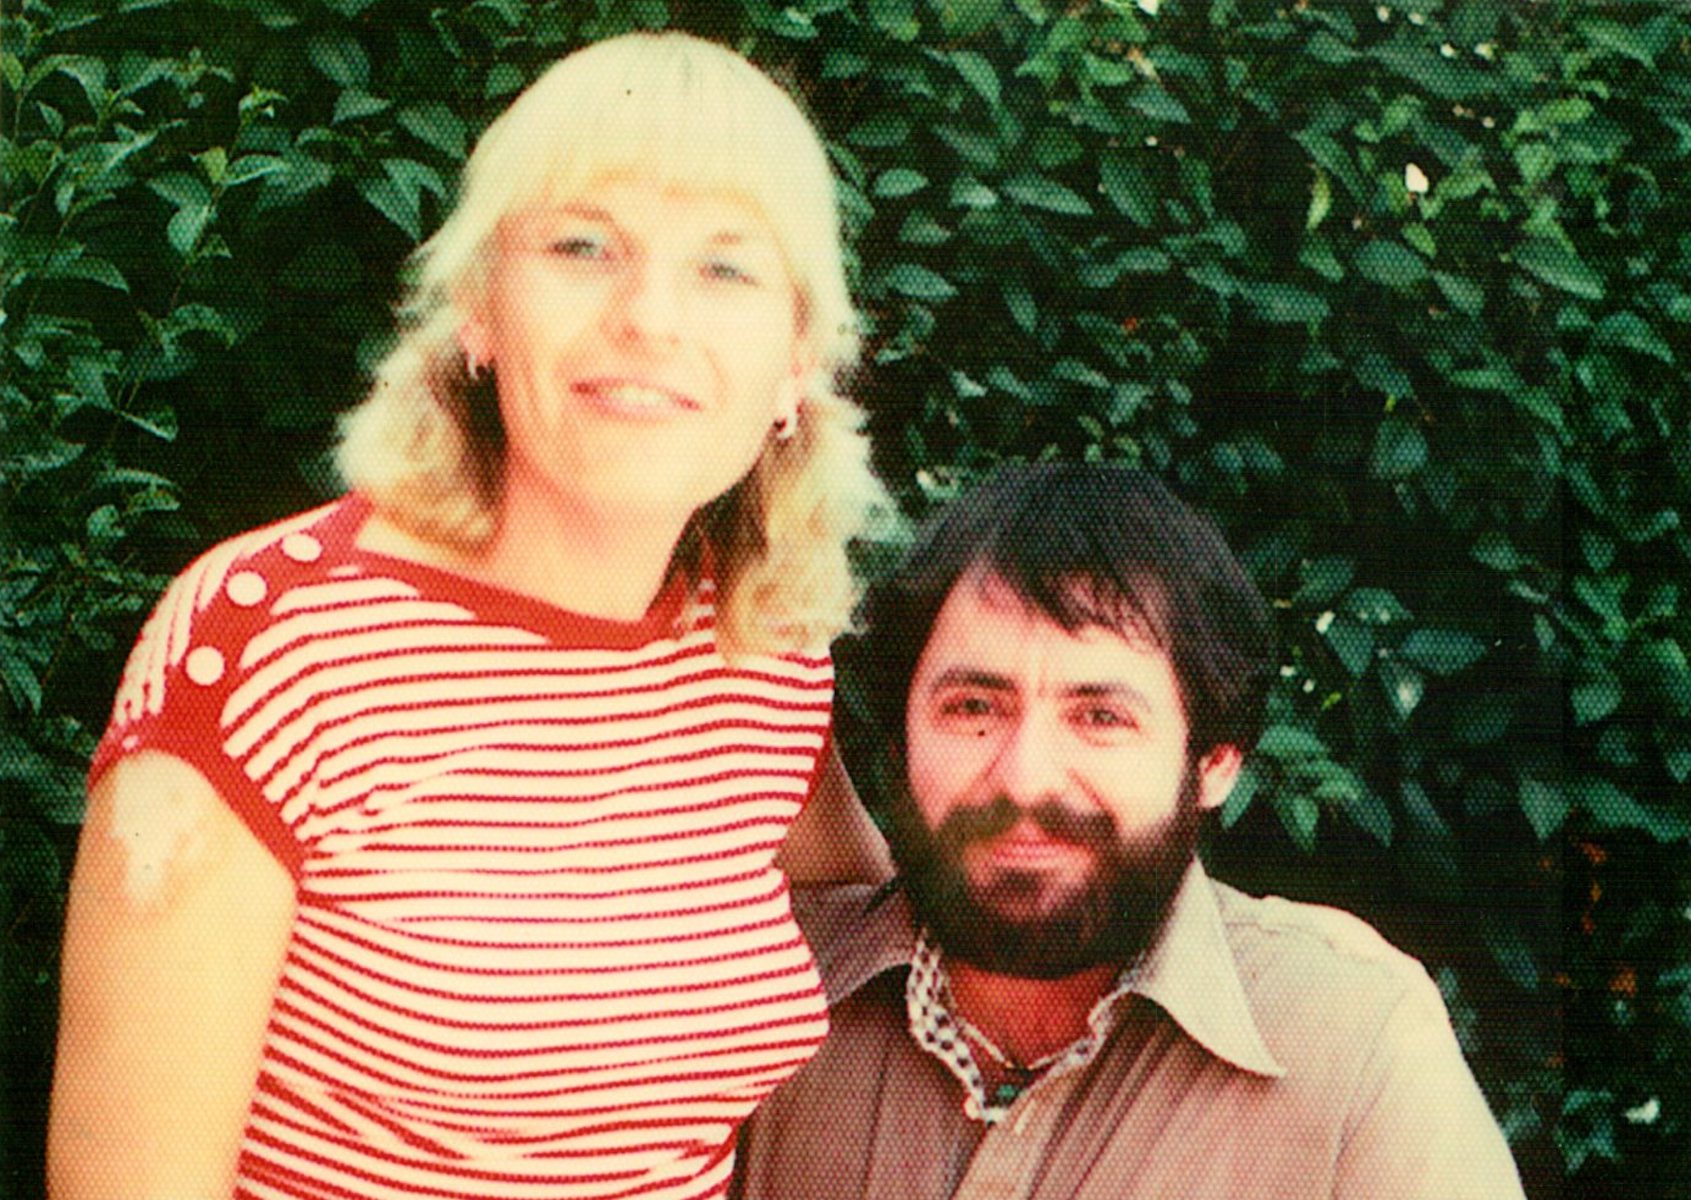 Jude Patton and his friend Karrie Wedlund, 1979. Photo courtesy of Jude Patton.